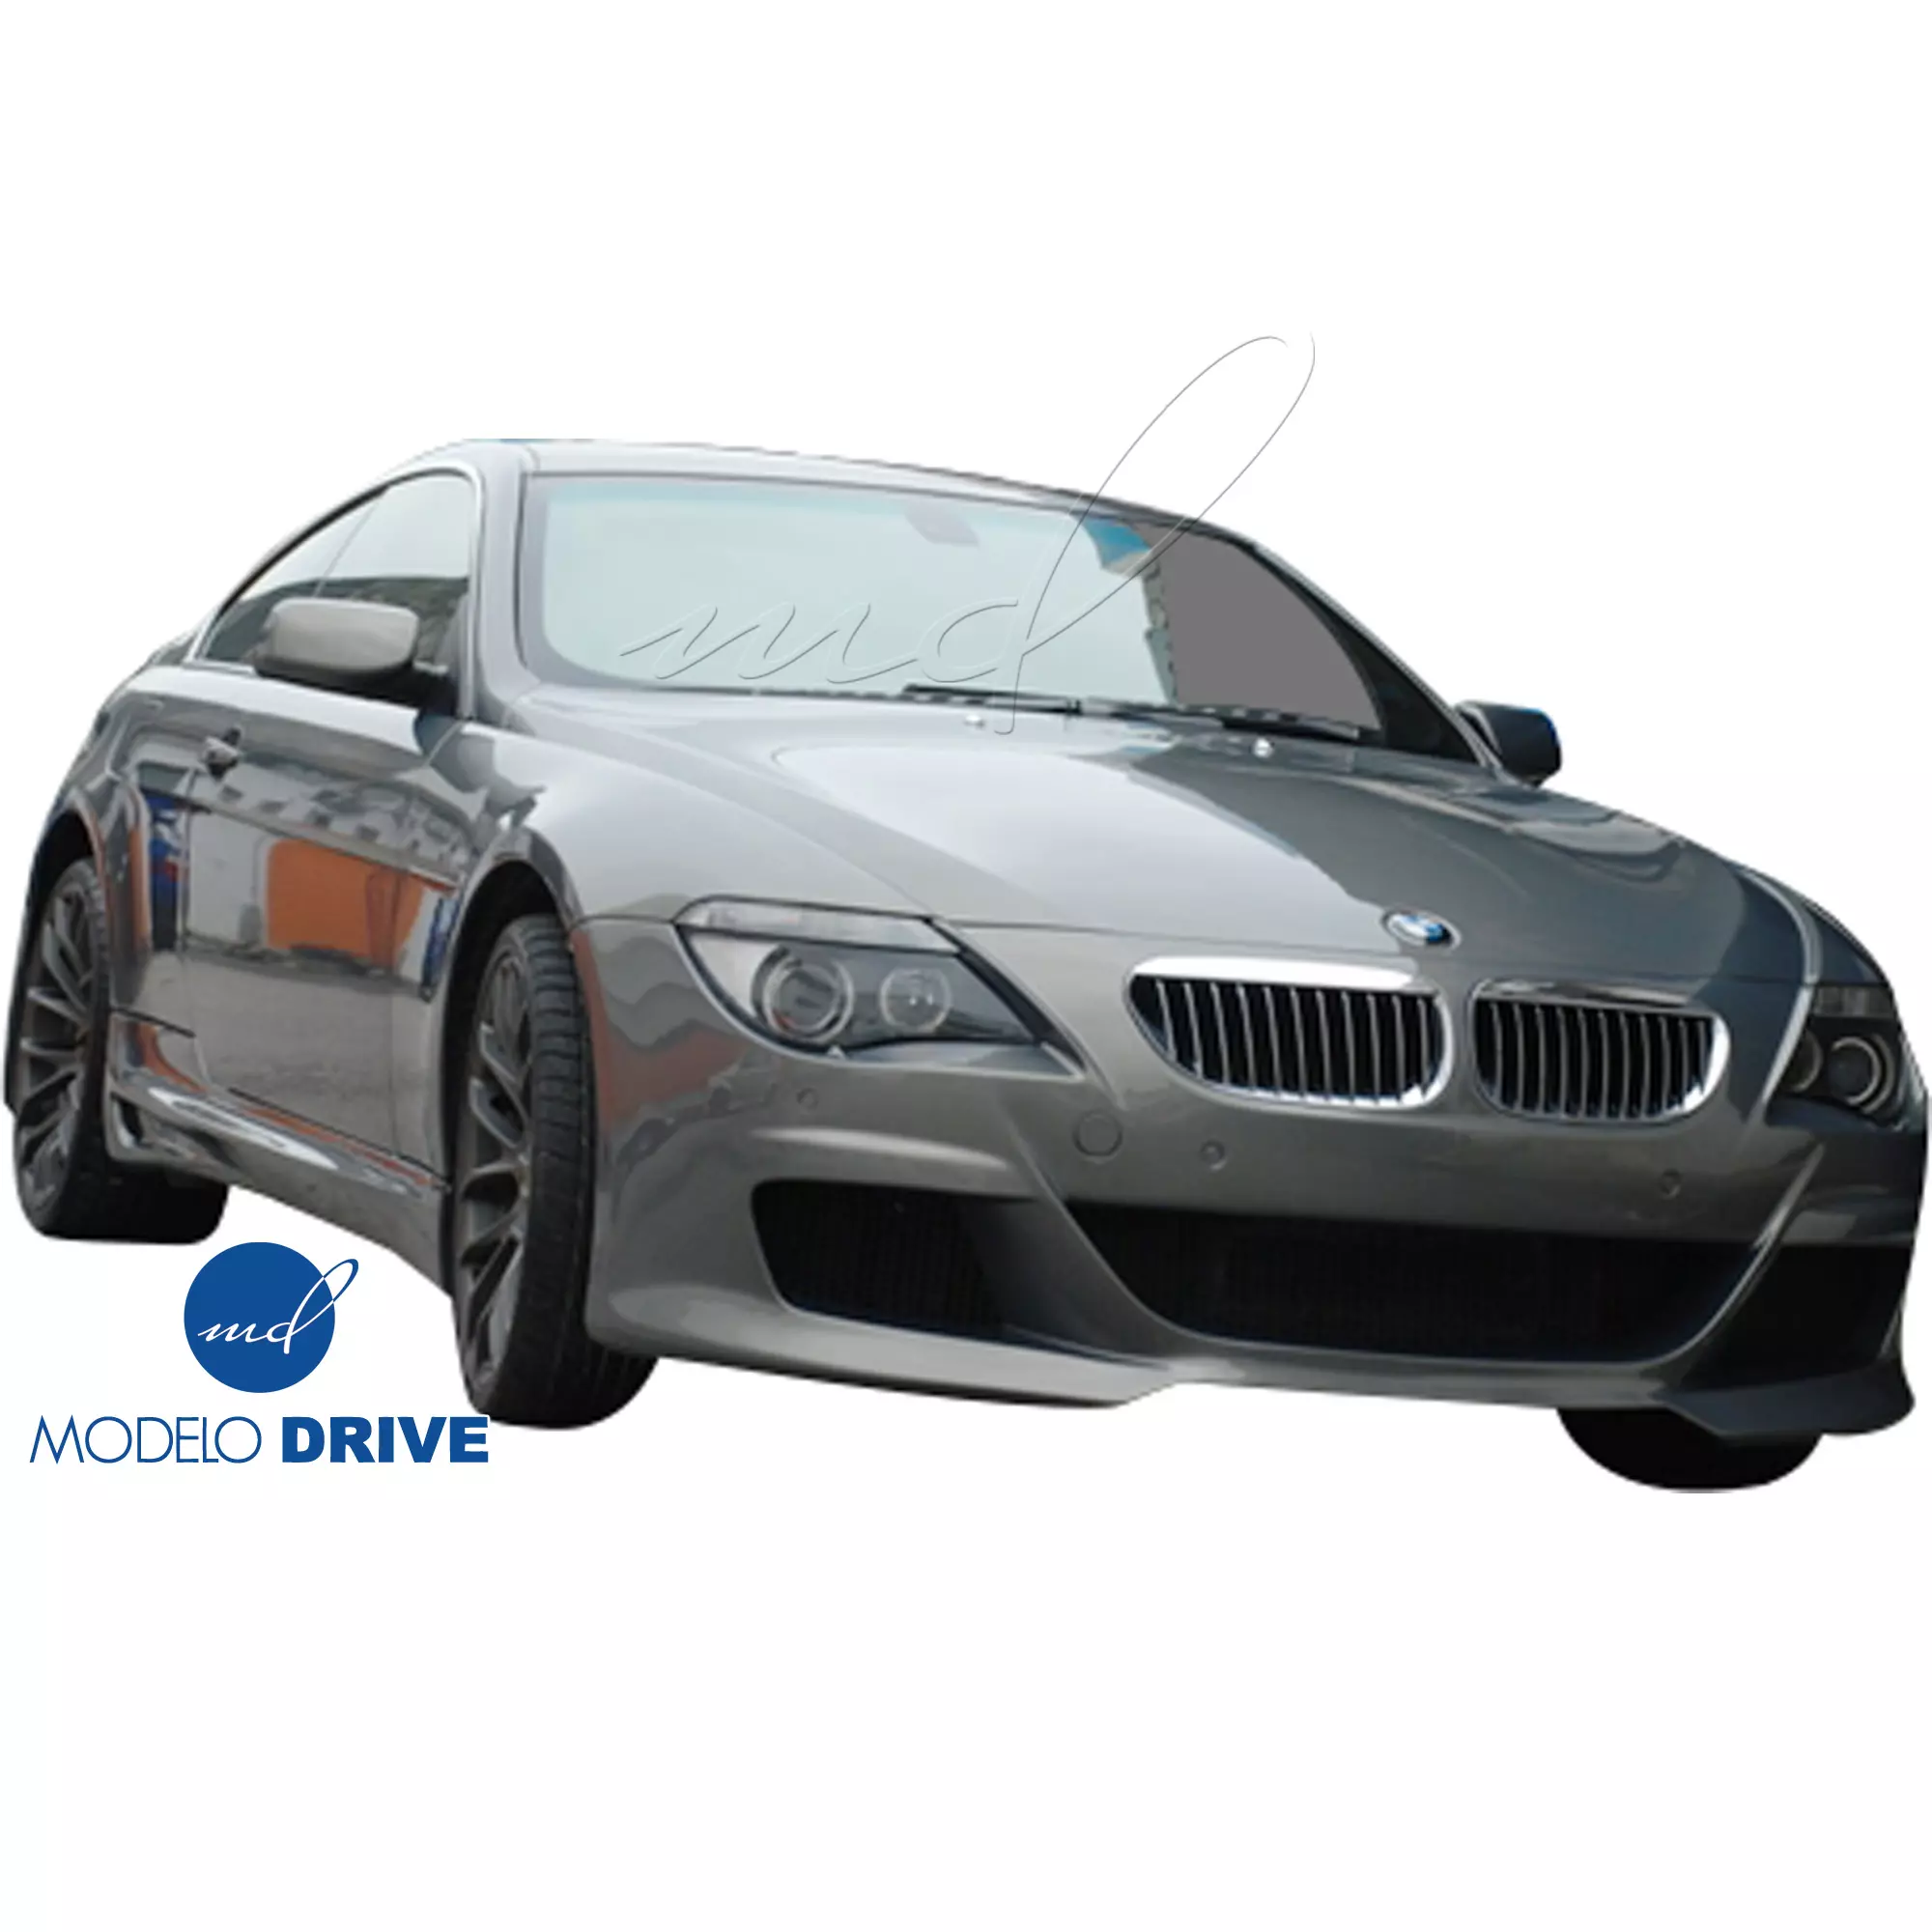 ModeloDrive FRP LDES Body Kit 4pc > BMW 6-Series E63 E64 2004-2010 > 2dr - Image 10